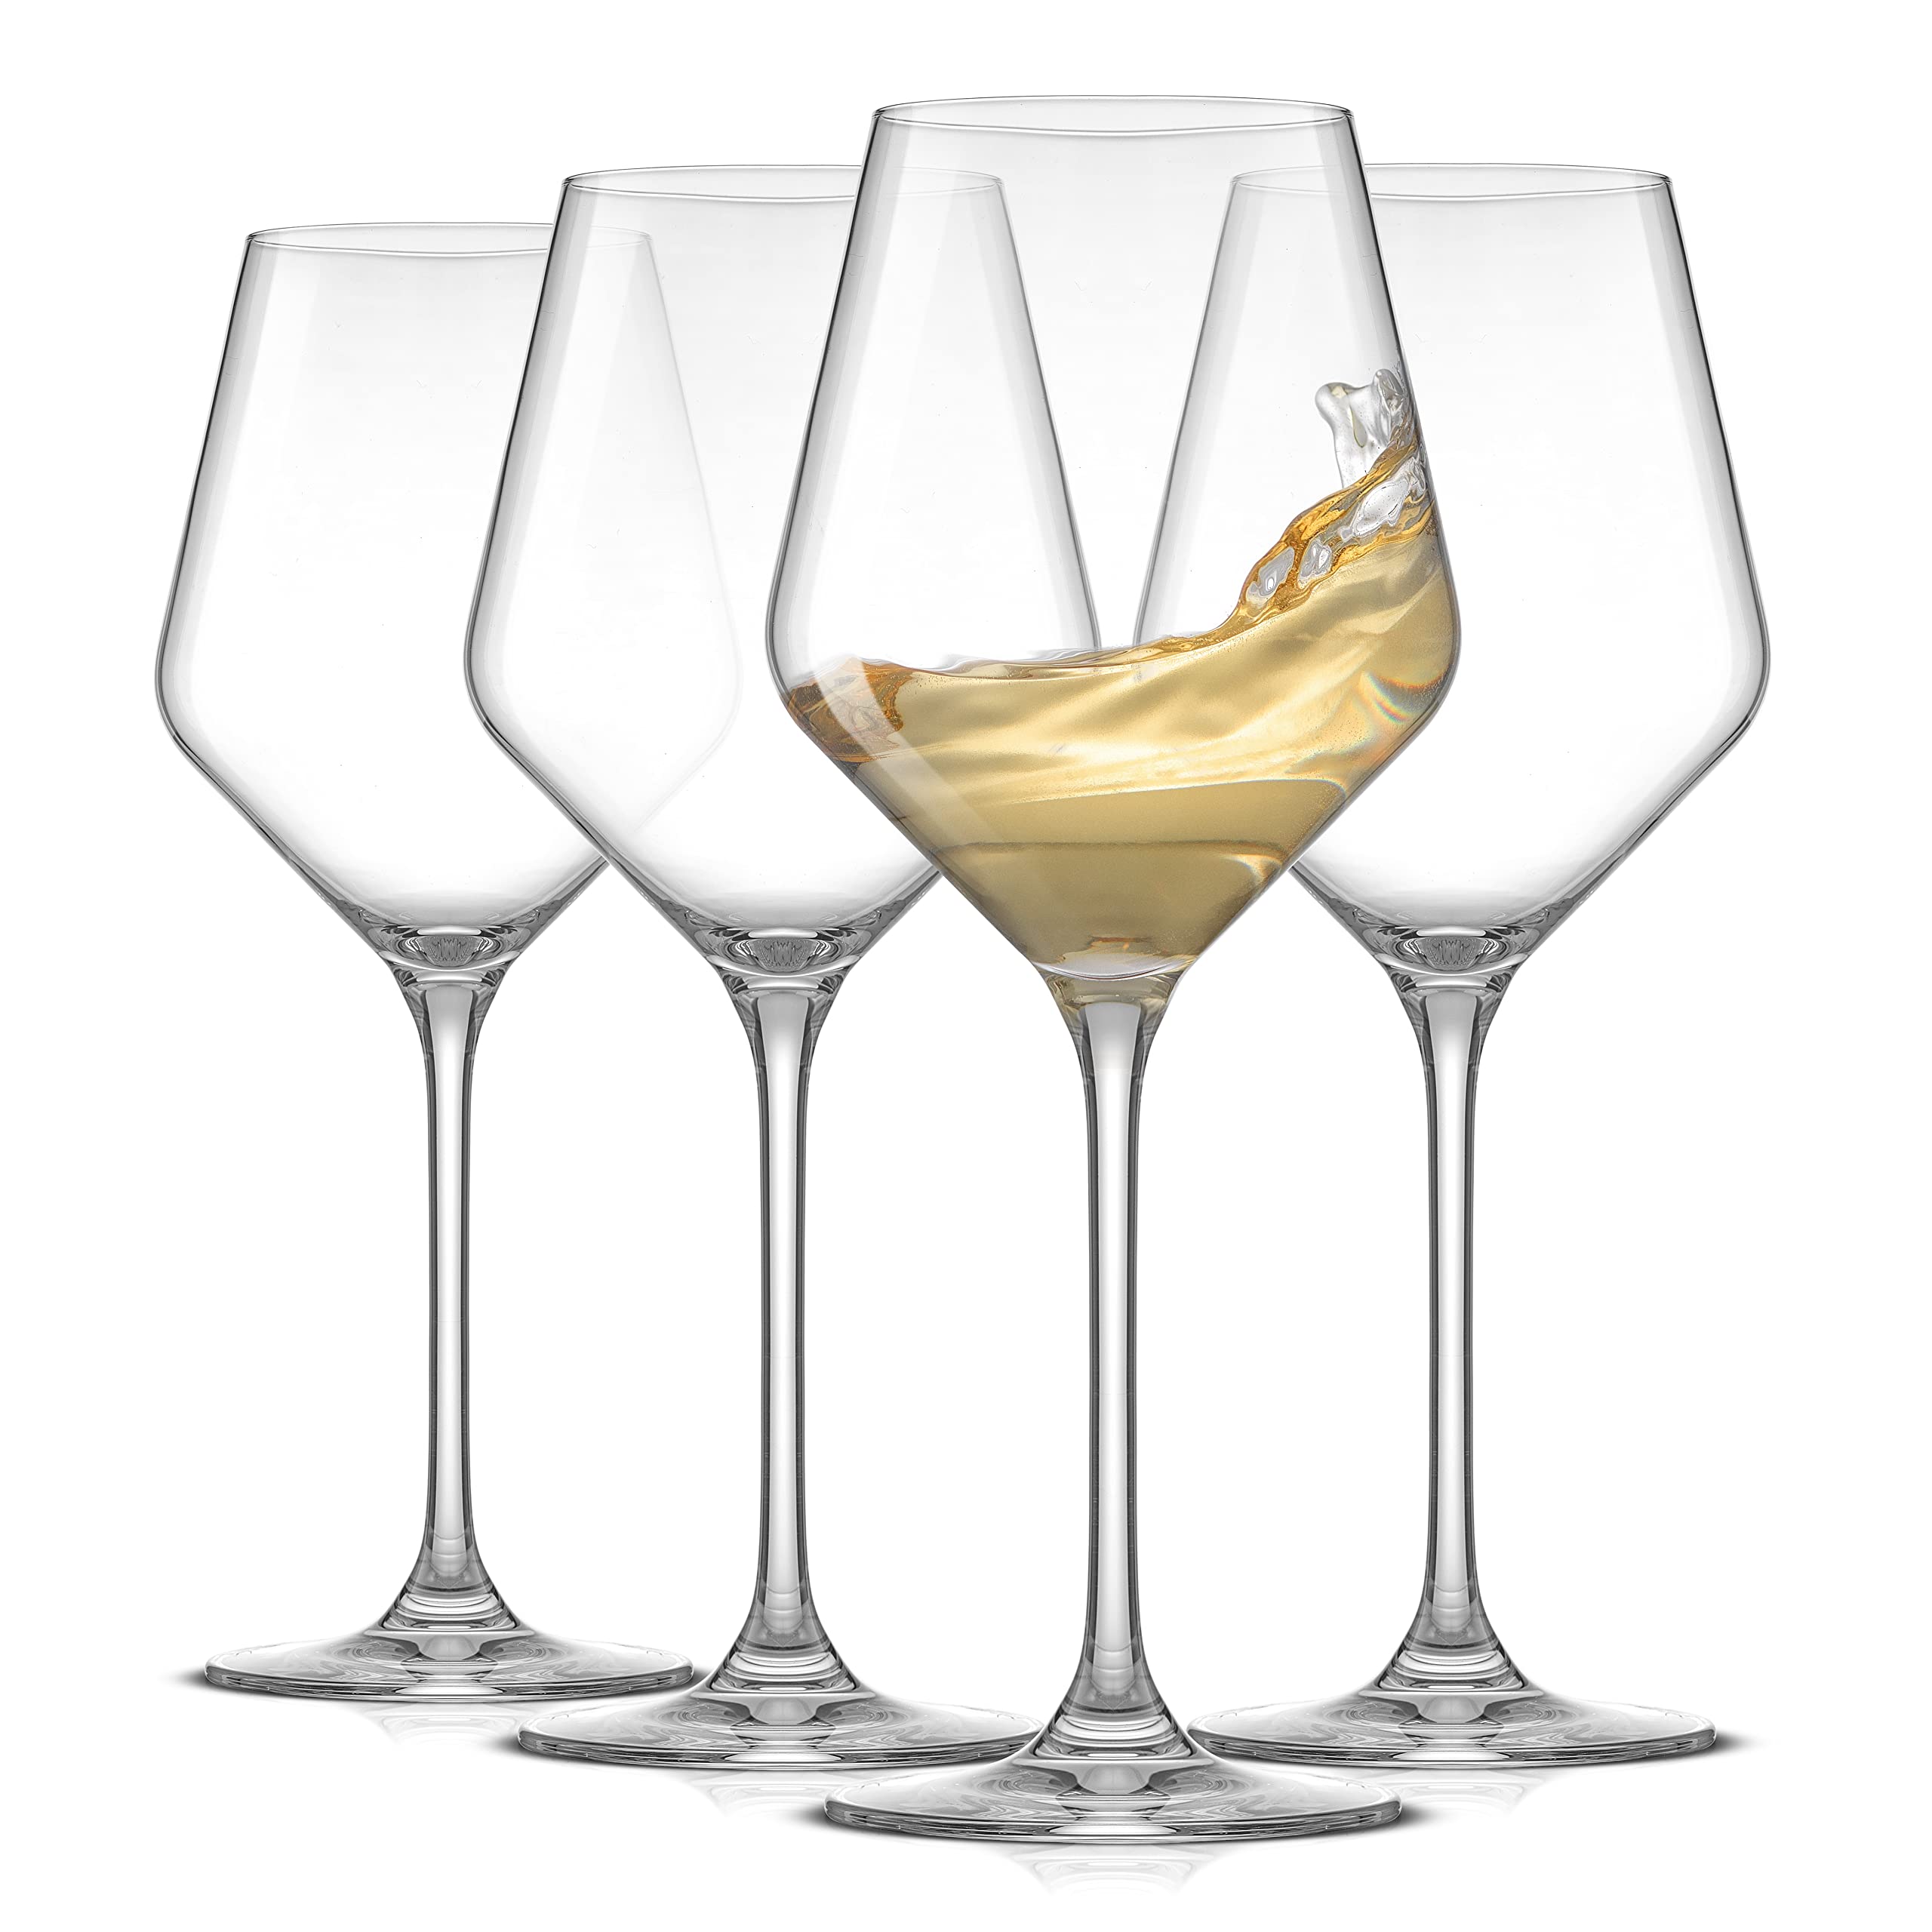 JoyJolt Layla White Wine Glasses, Set of 4 Italian Glasses, 13.5 oz Clear – Made in Europe